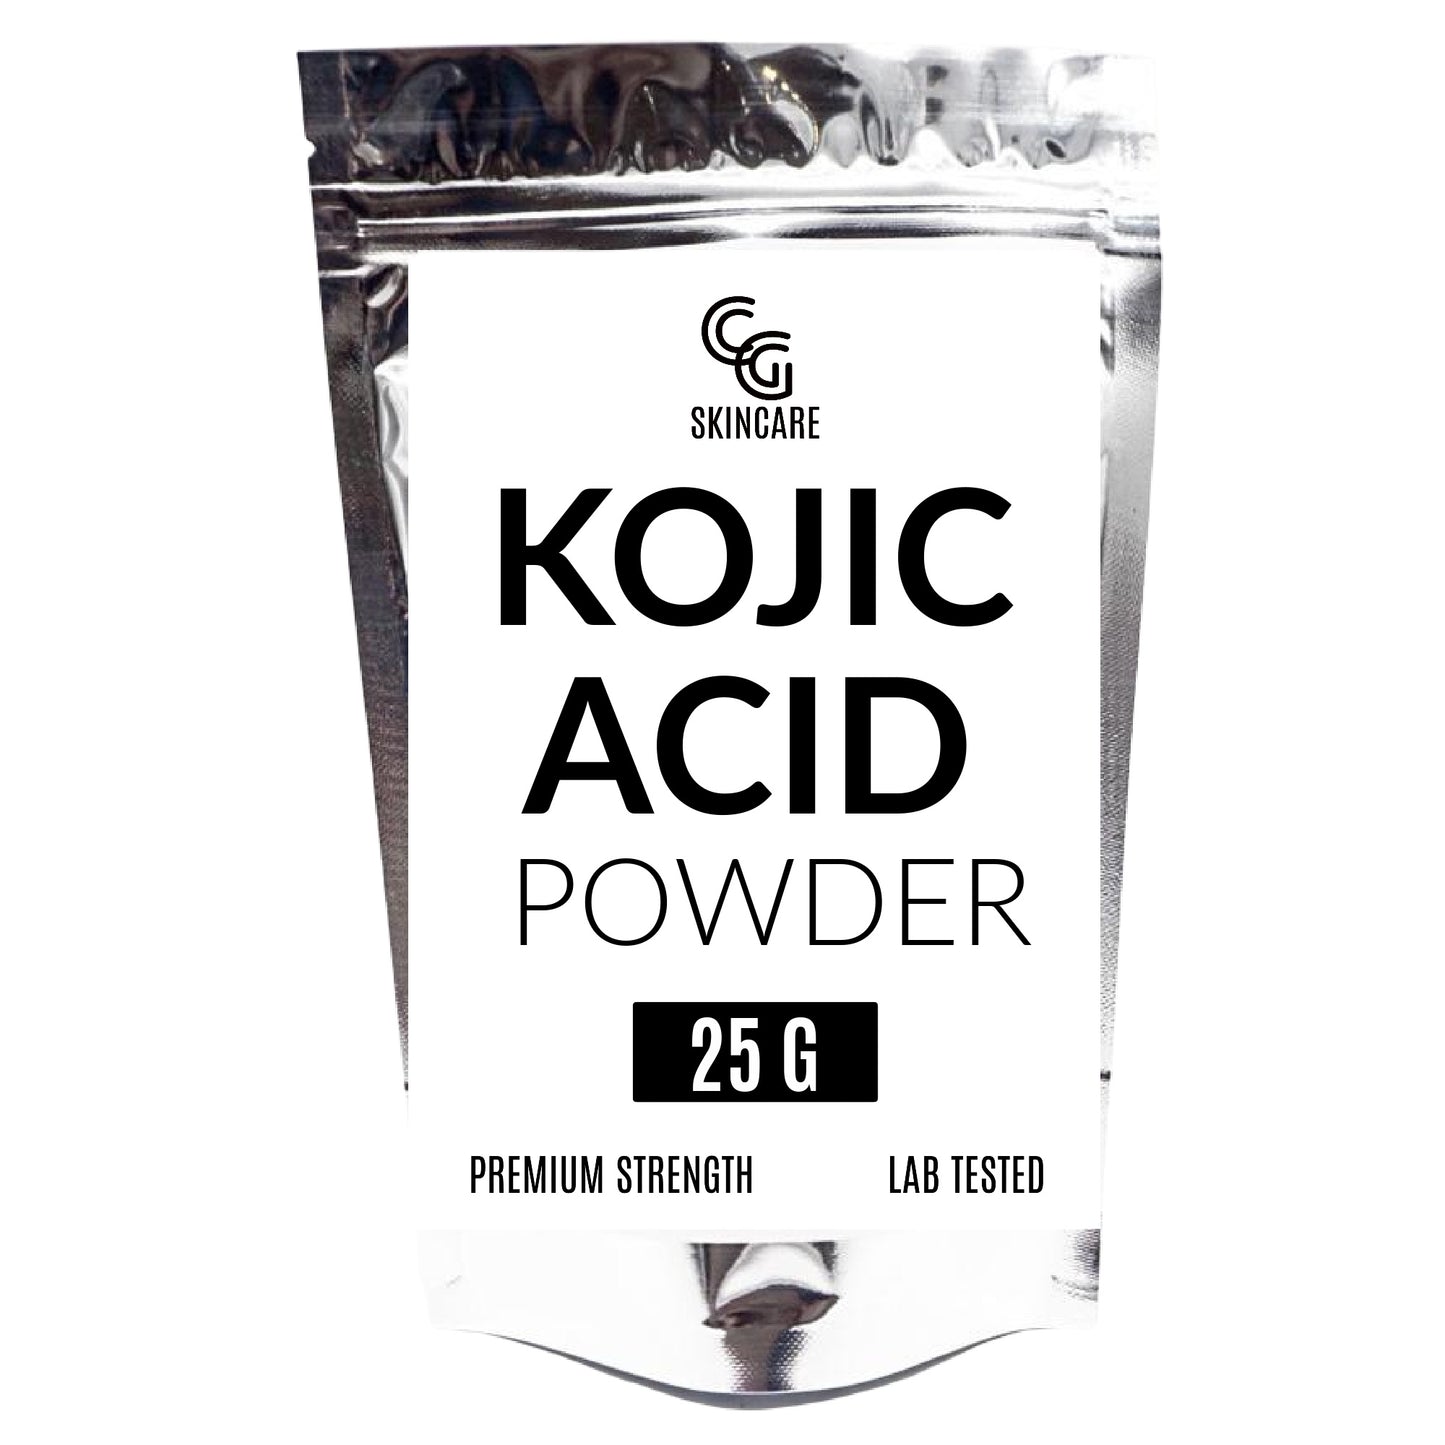 Premium Strength Kojic Acid Powder